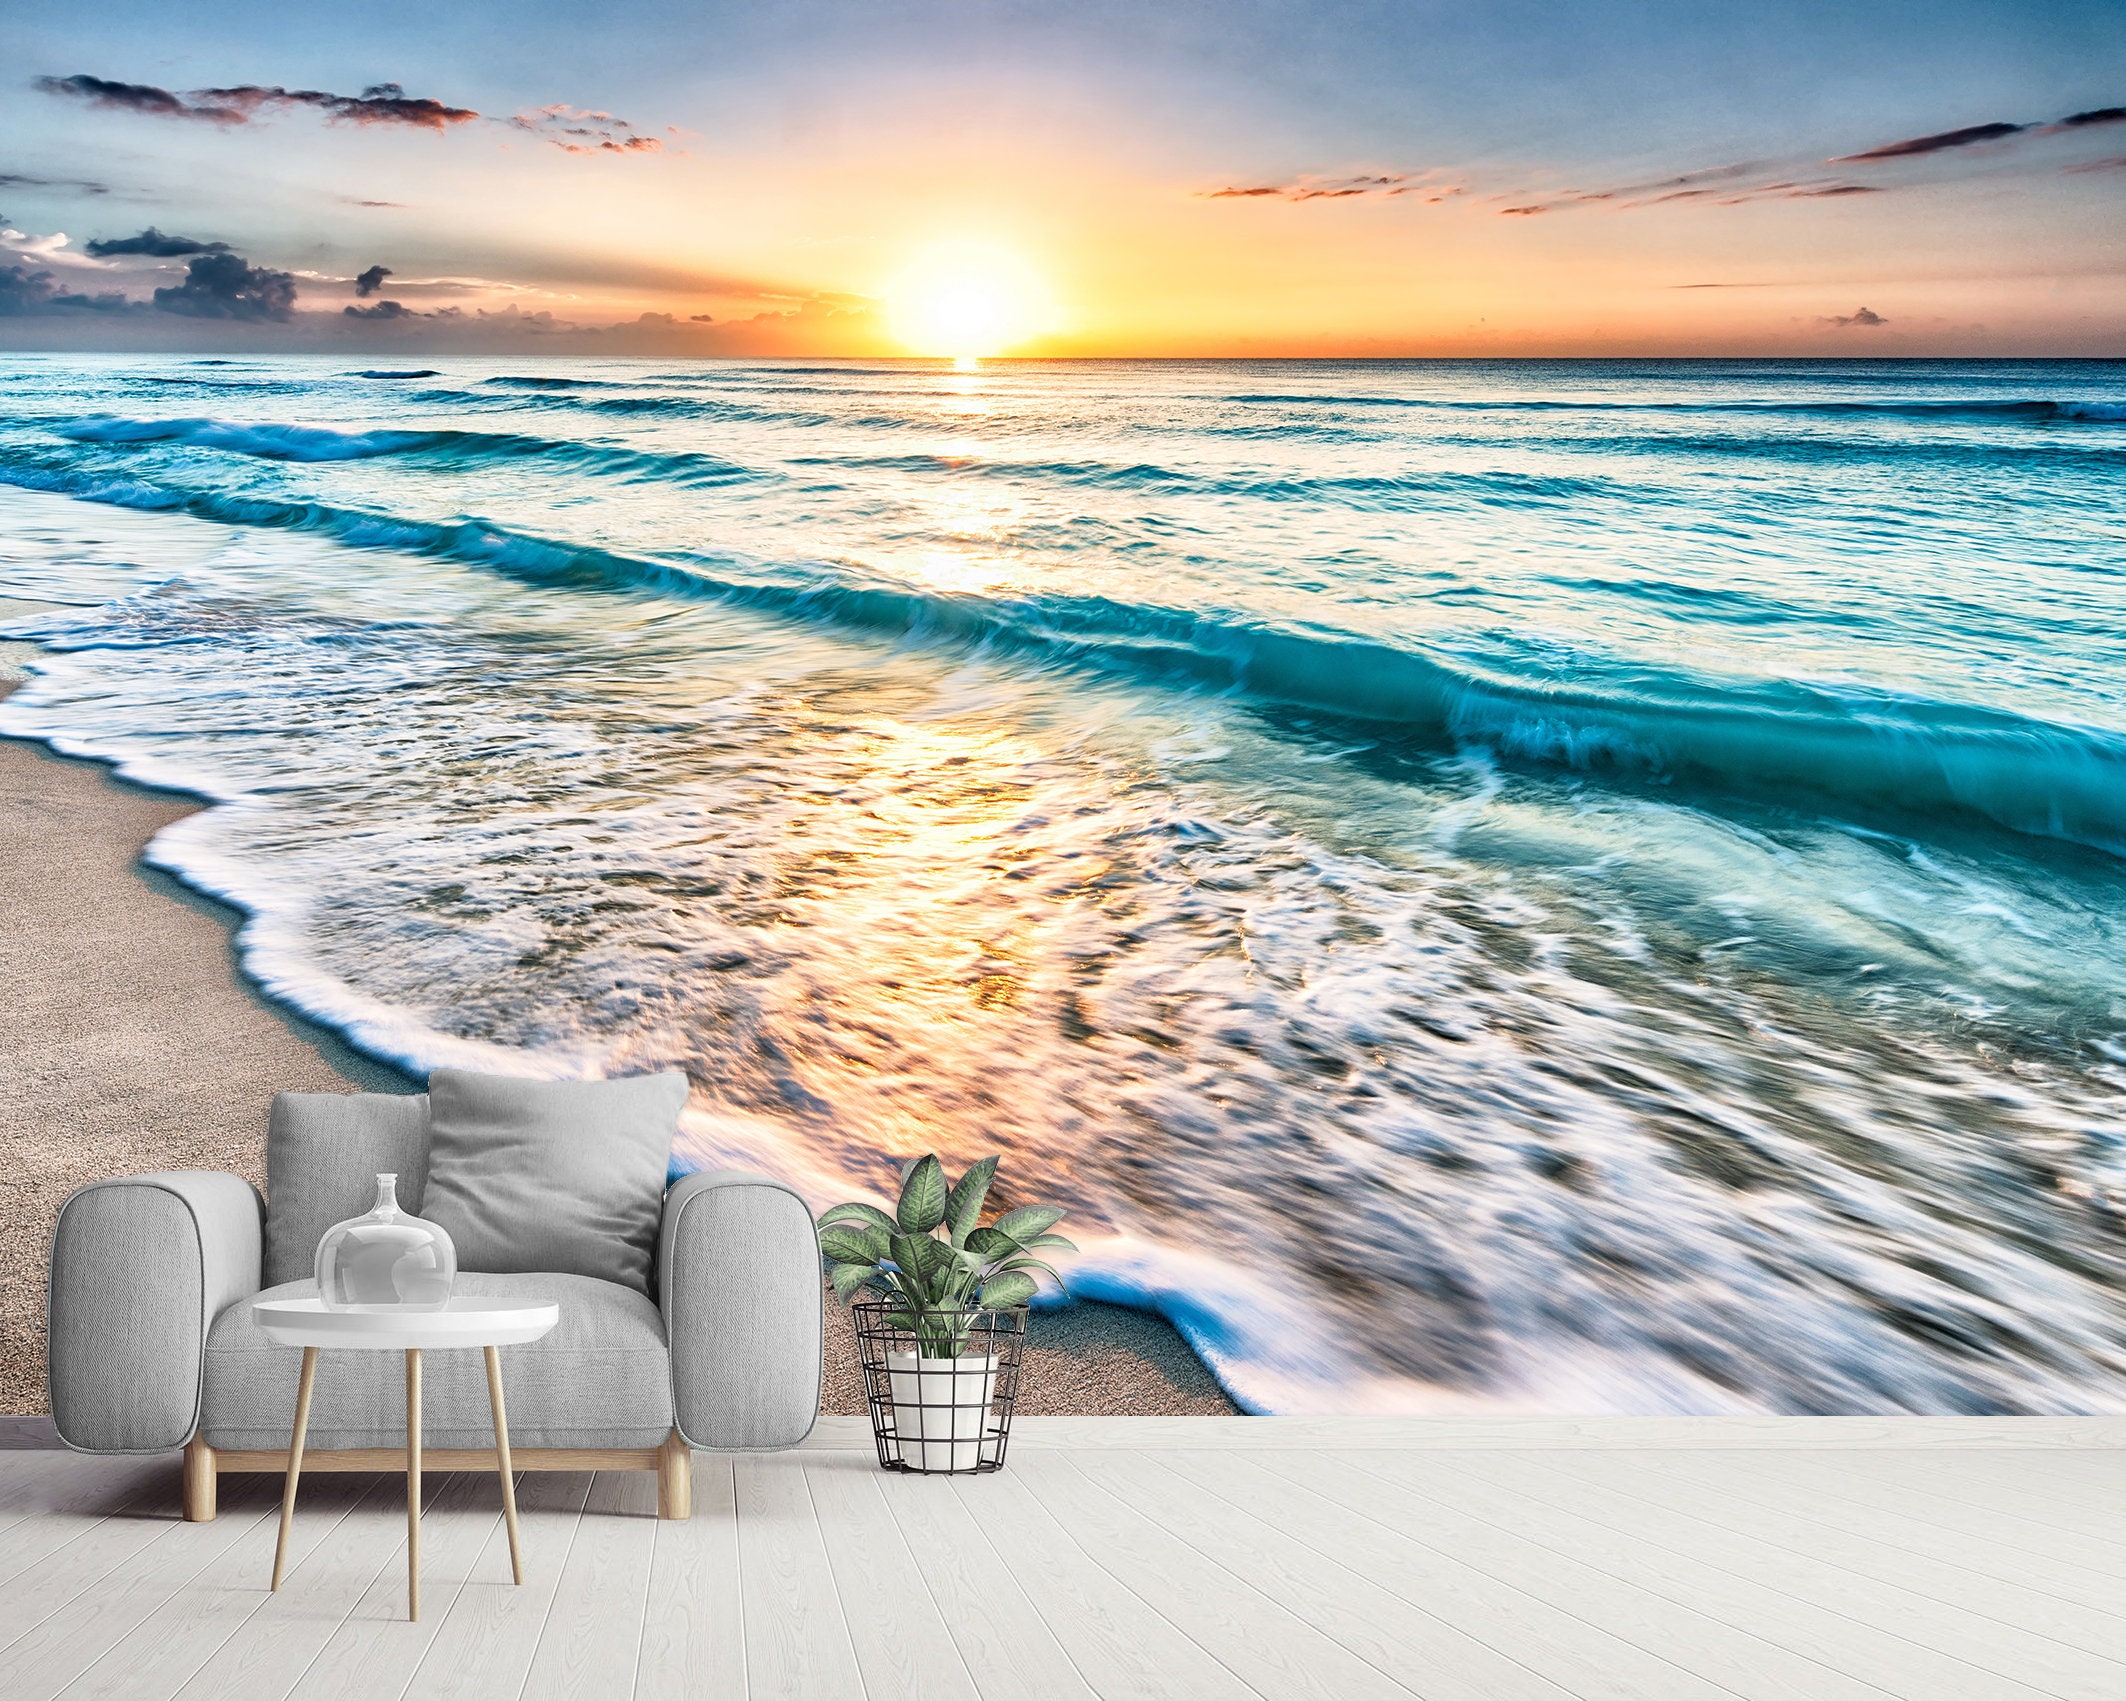 Dreamy Sea Beach Peel and Stick Wallpaper Mural Ocean Sunset hq photo